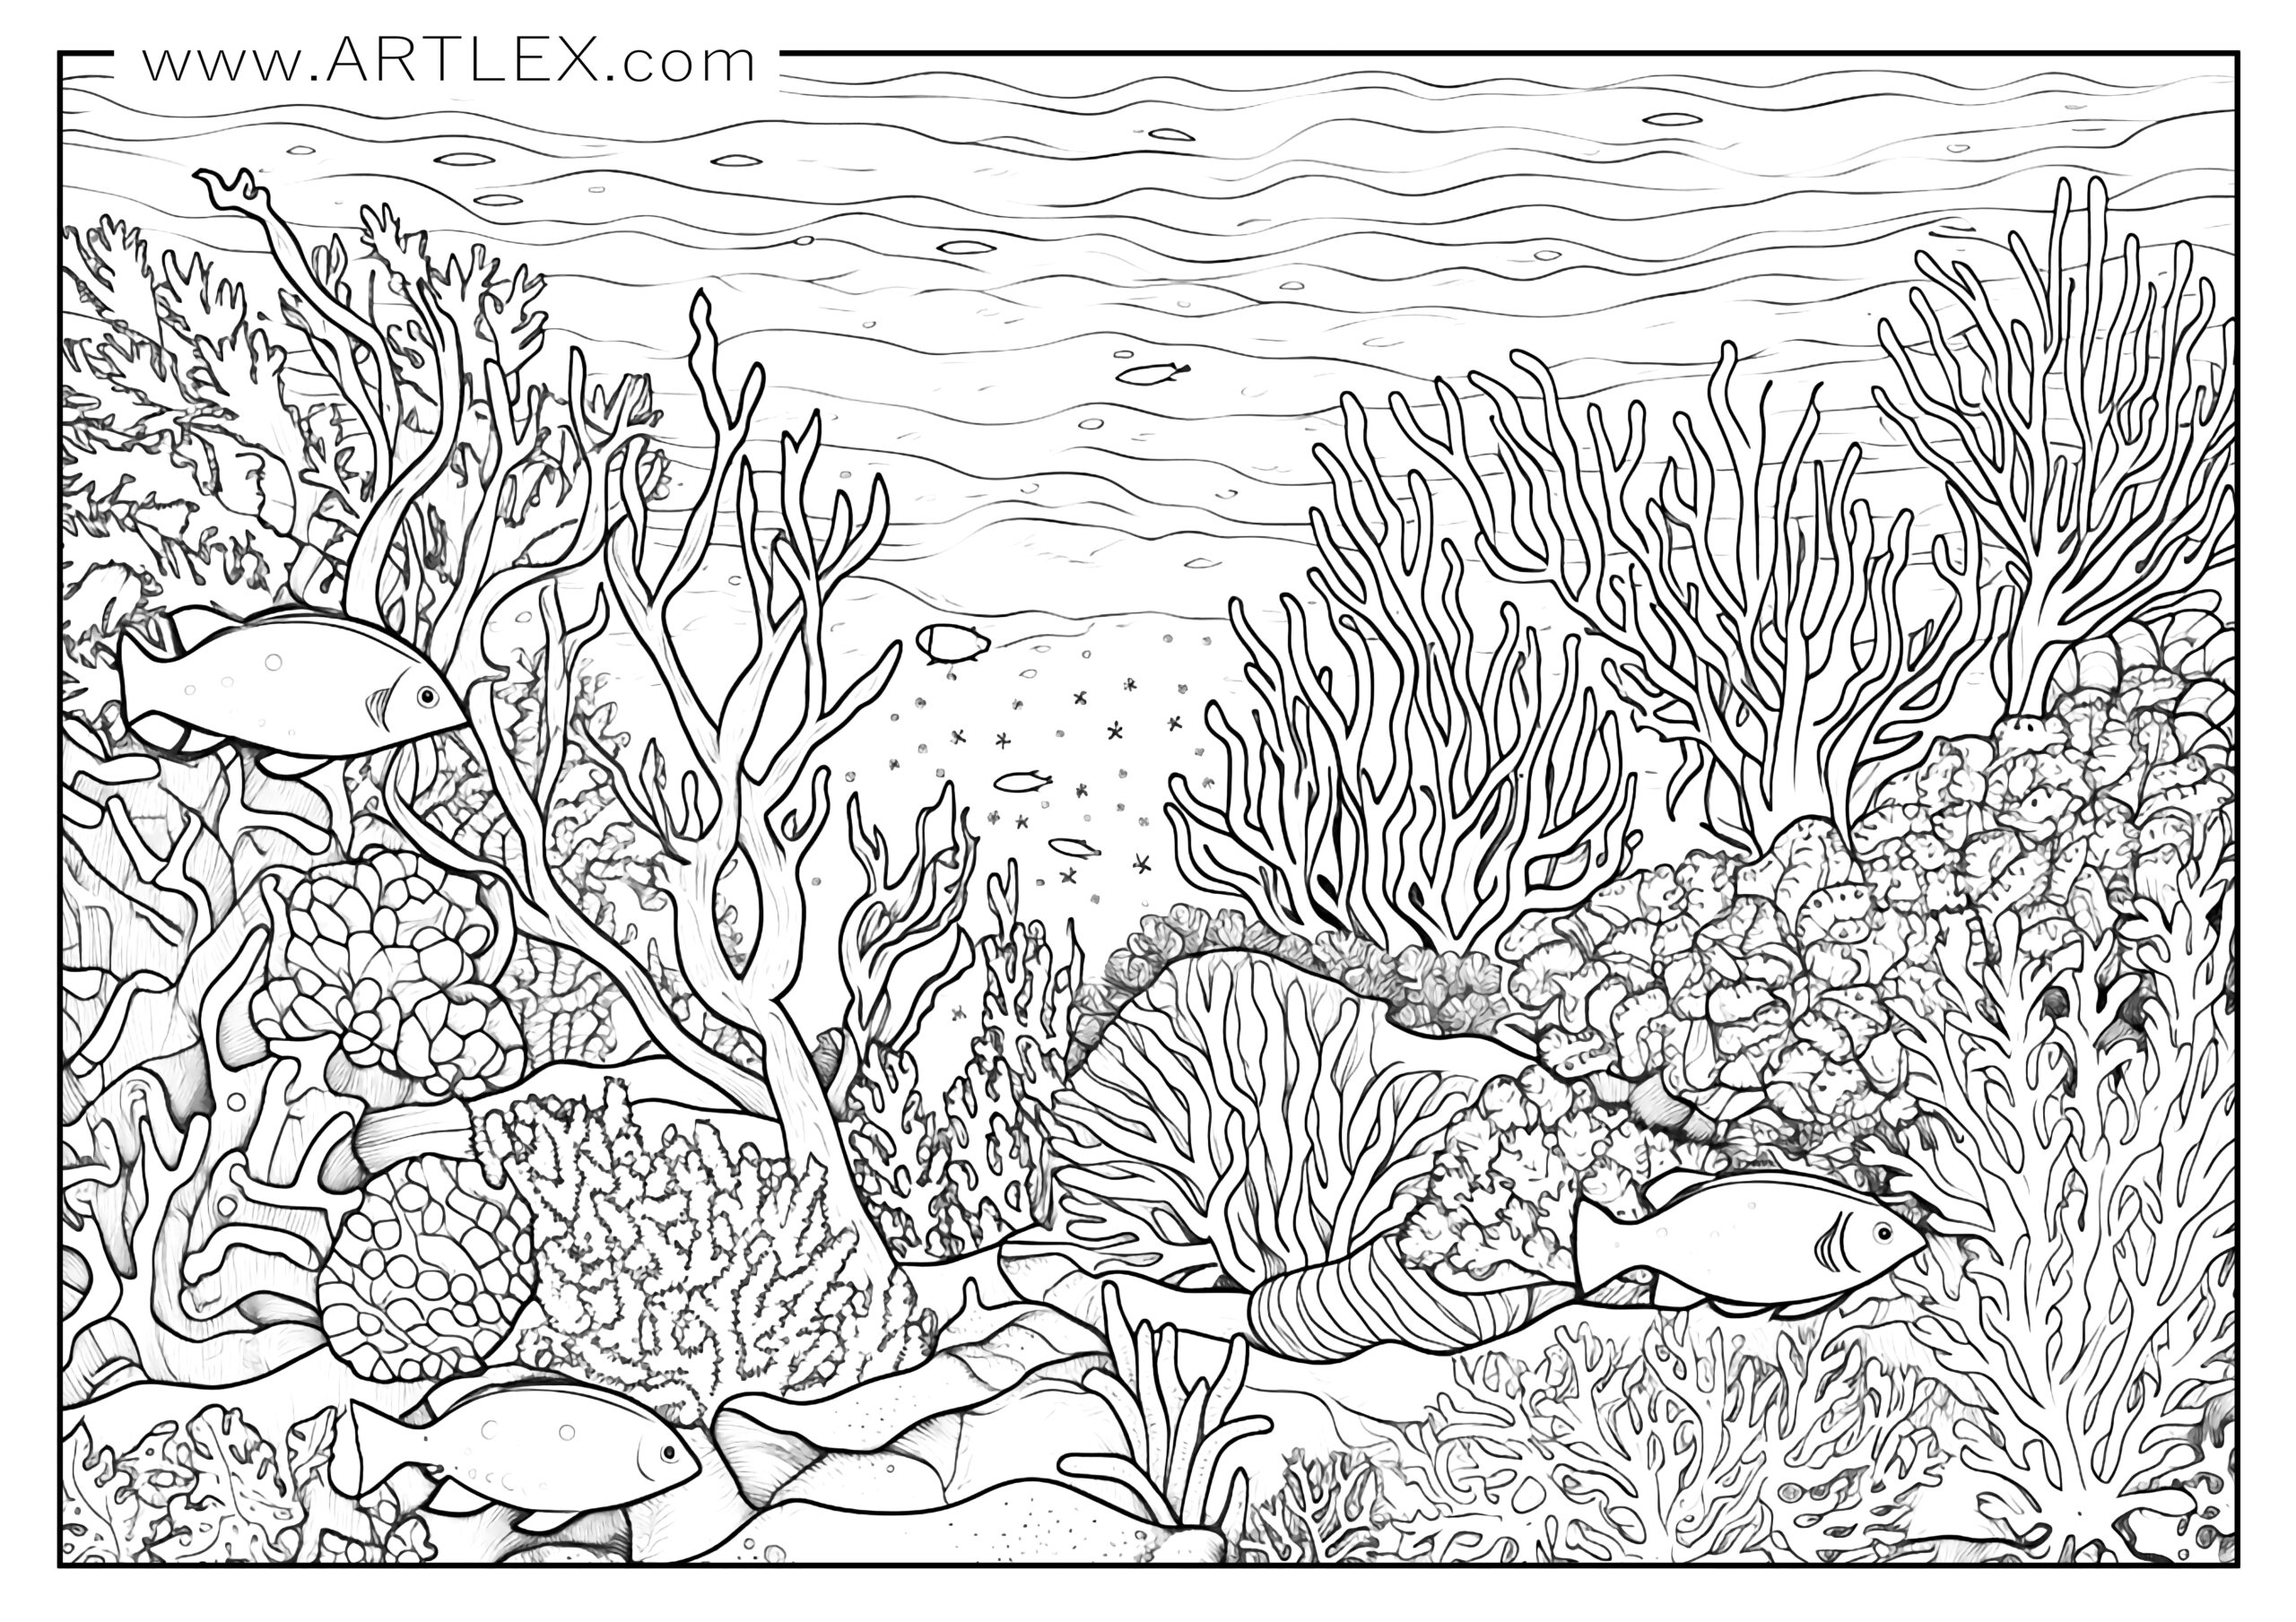 Ocean coloring pages free printable â